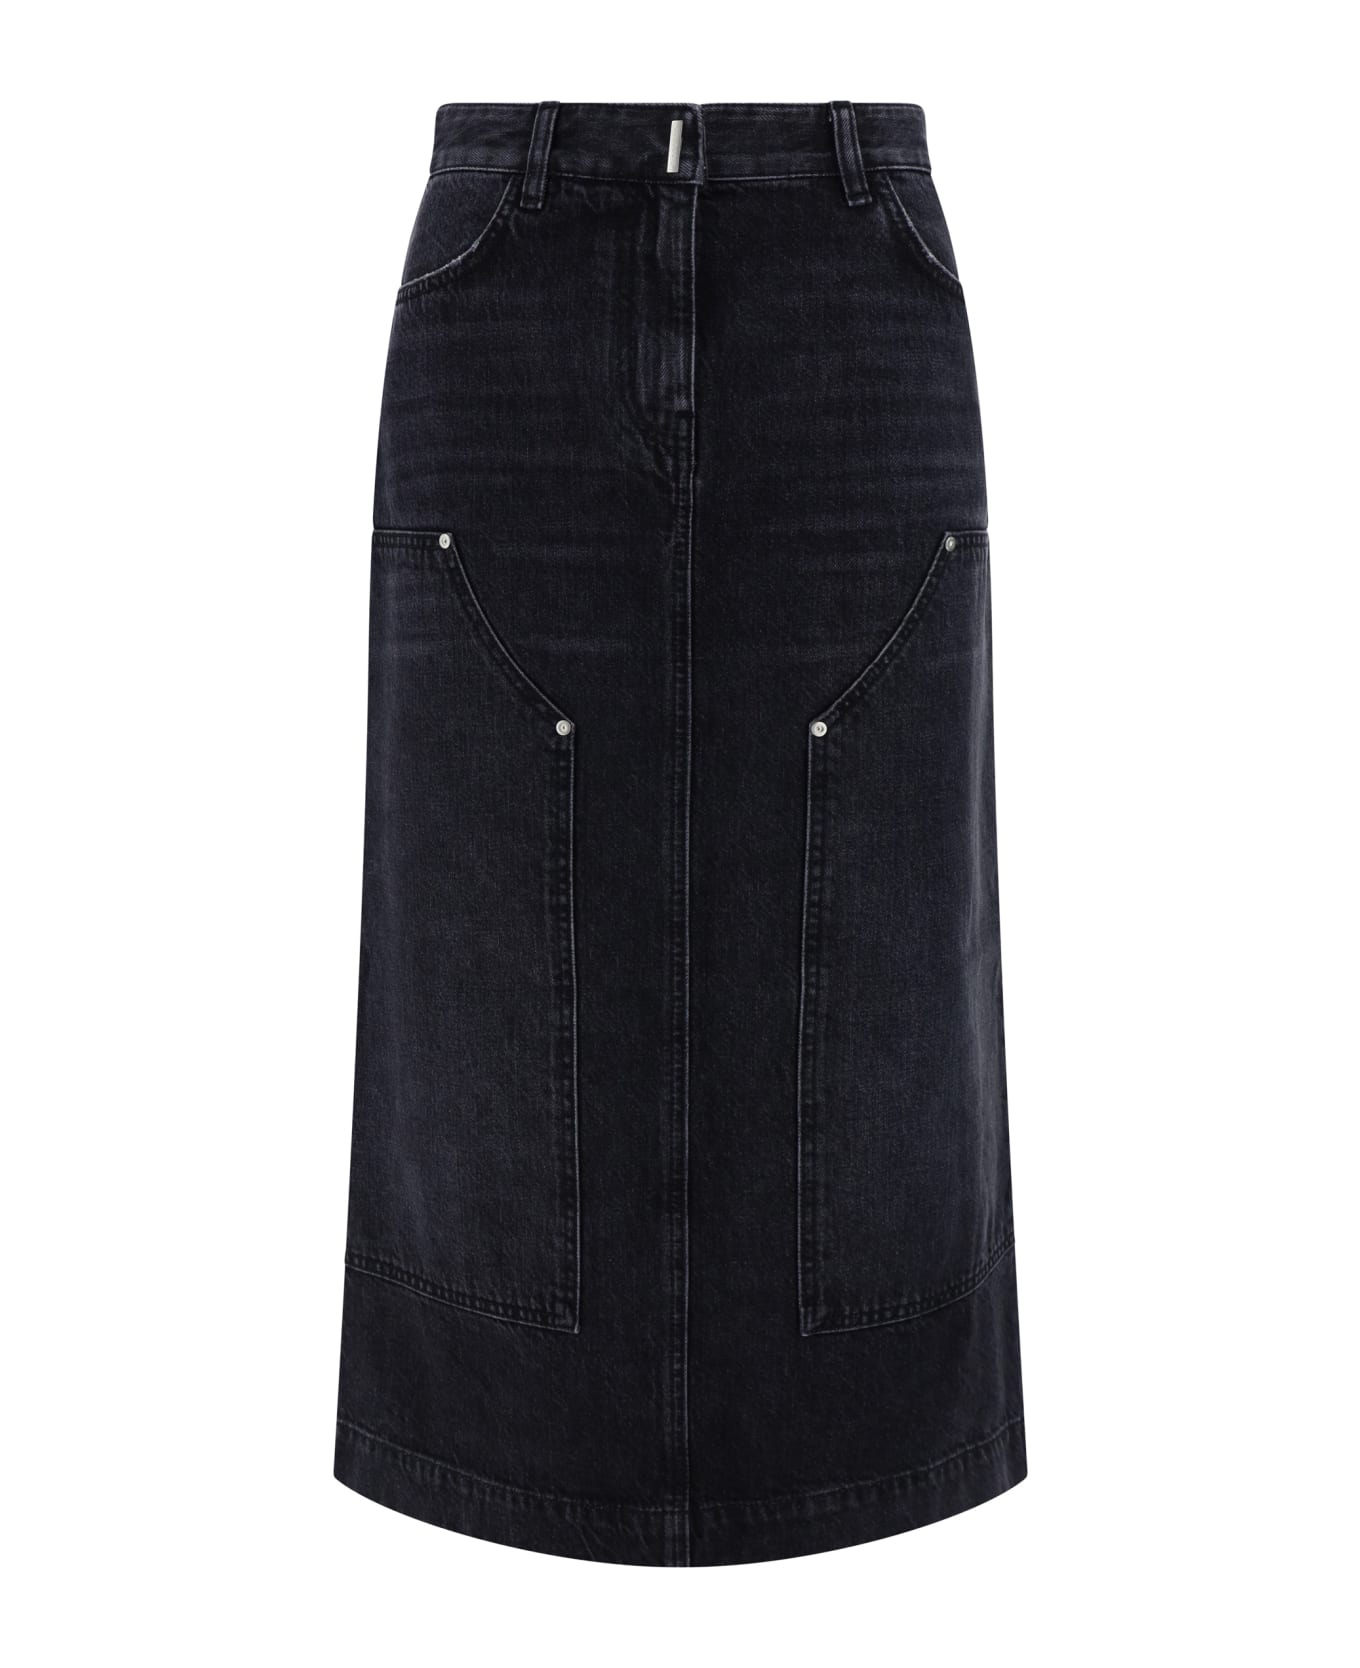 Givenchy Denim Skirt - Faded Black